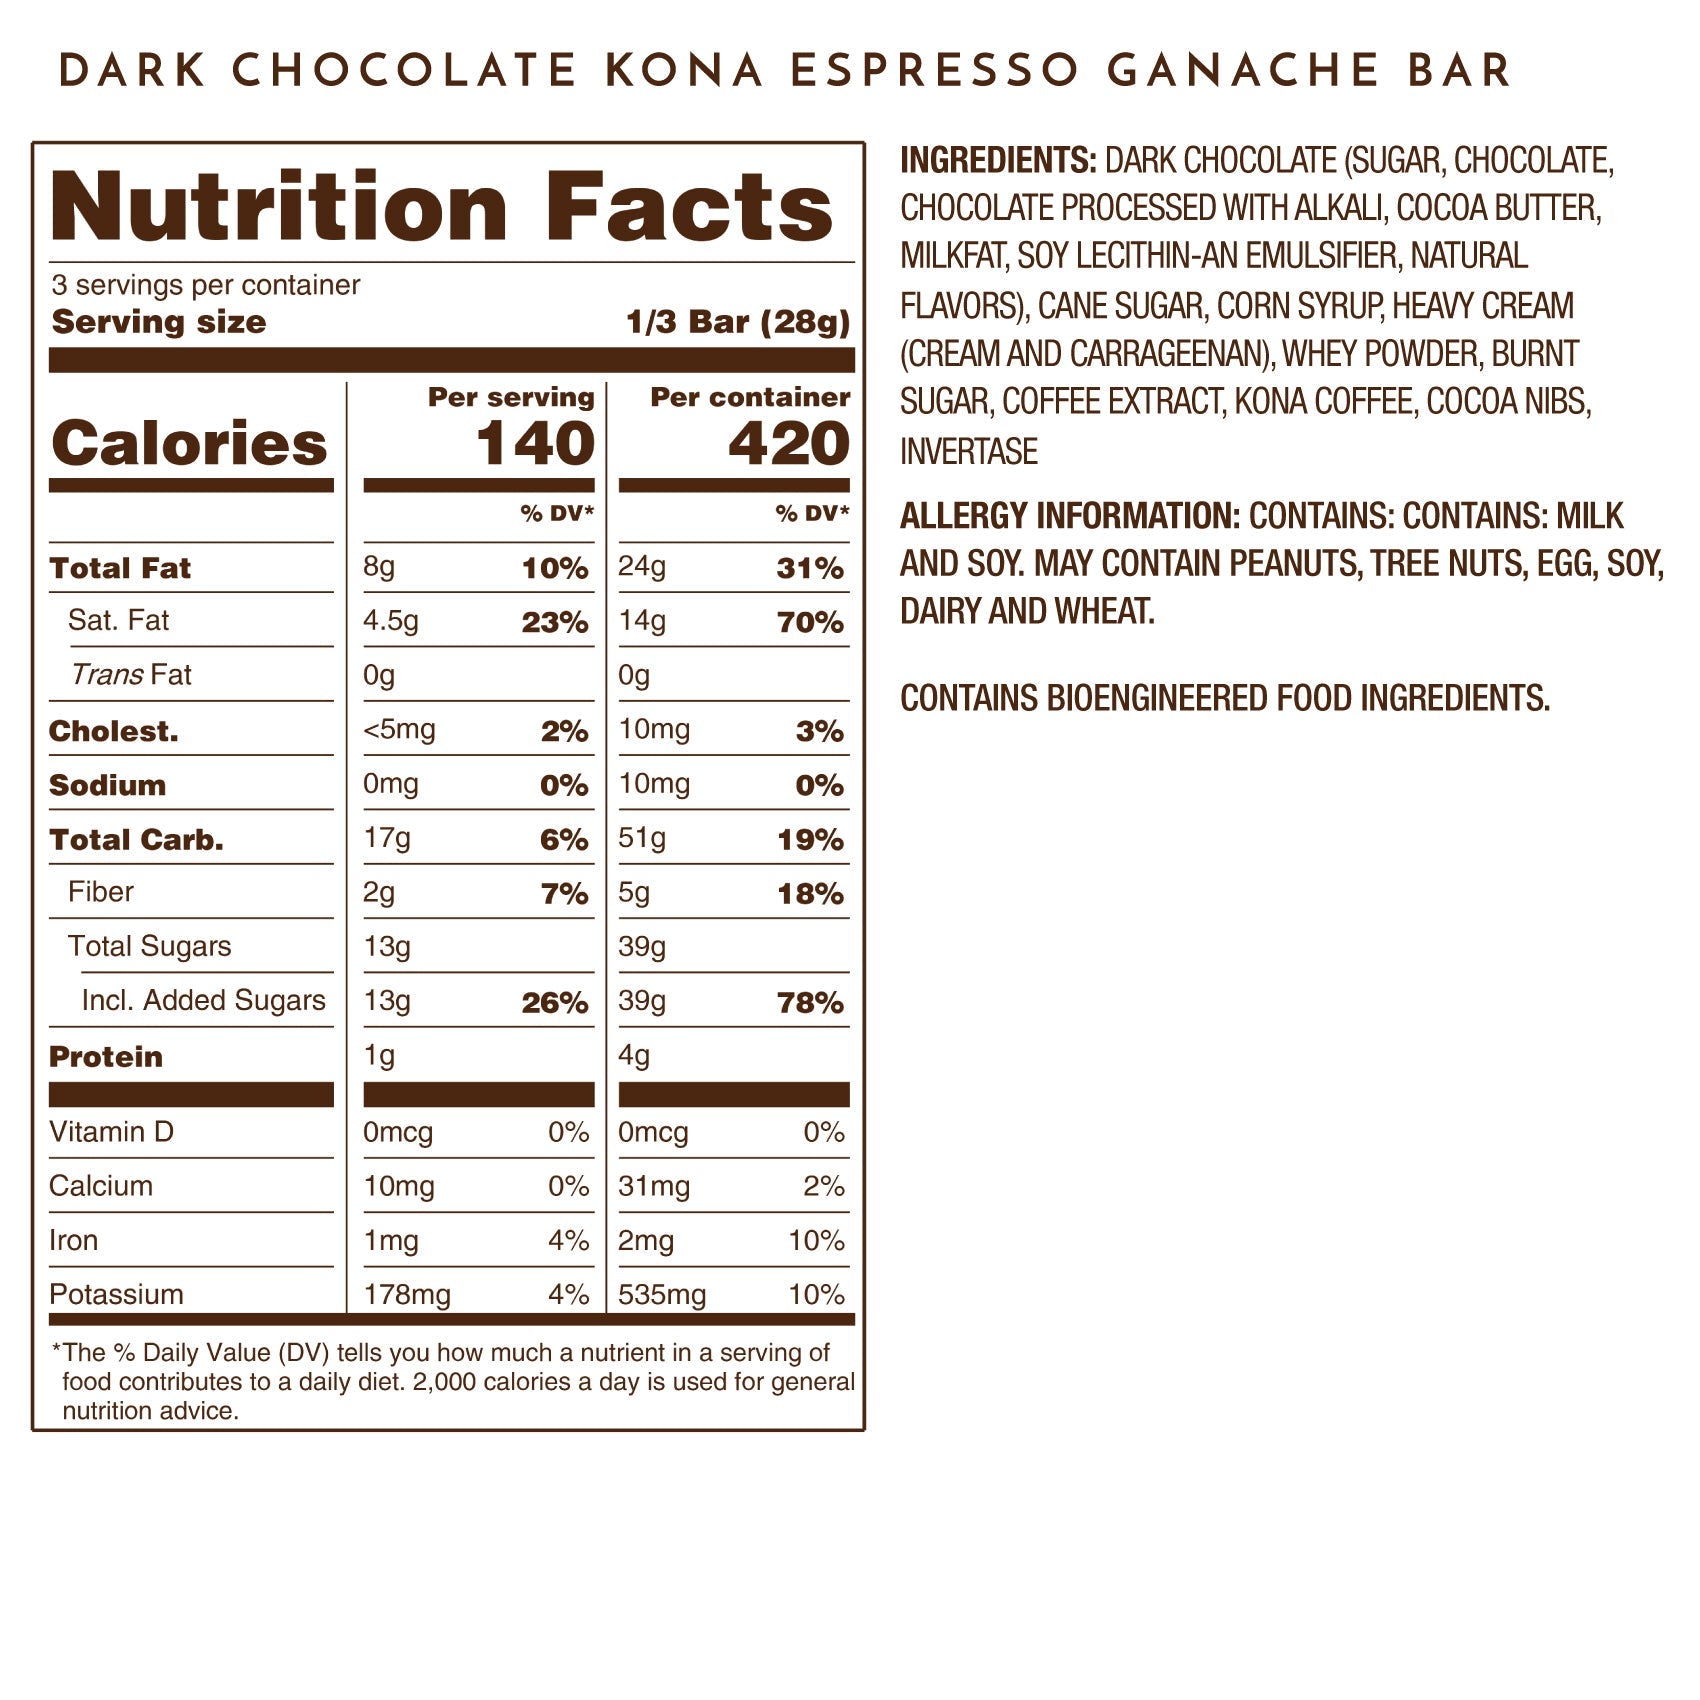 Kona Espresso Ganache Dark Chocolate Tablet Bar Nutrition Facts